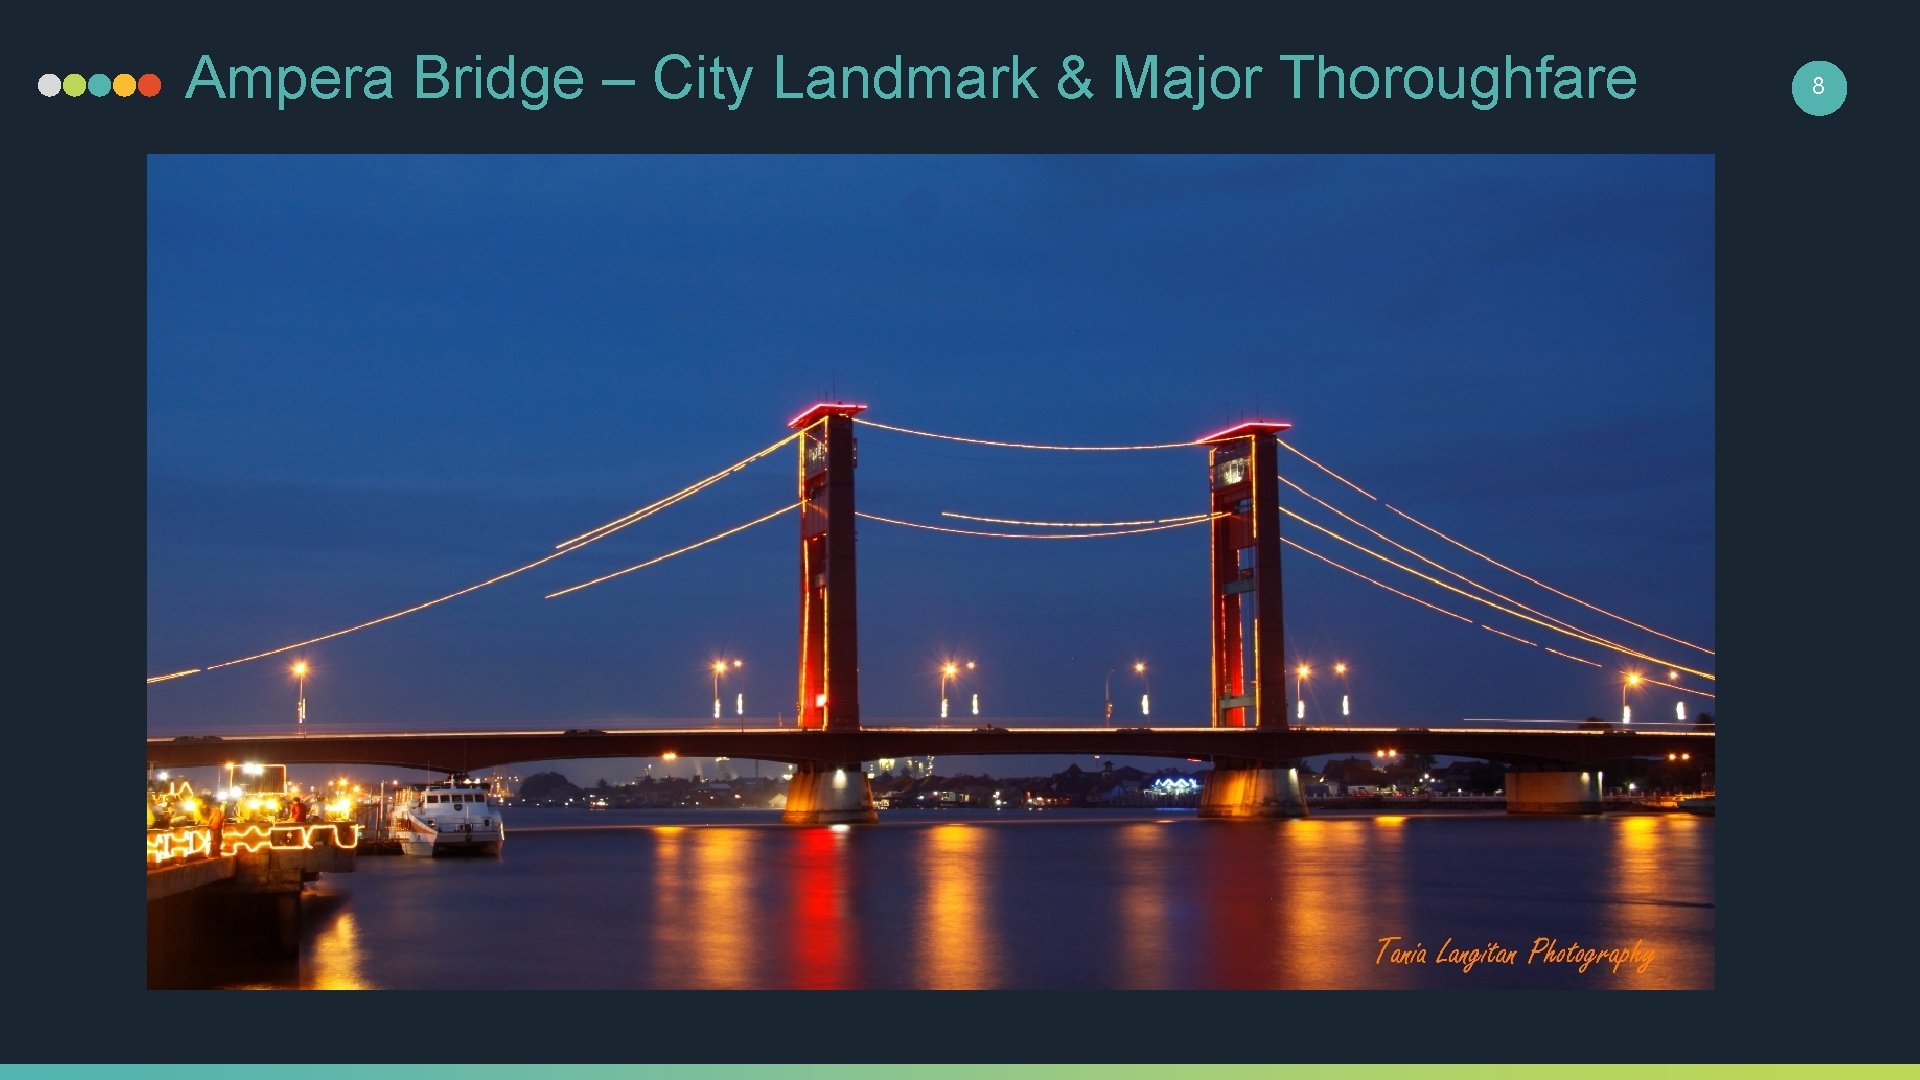 Ampera Bridge – City Landmark & Major Thoroughfare 8 